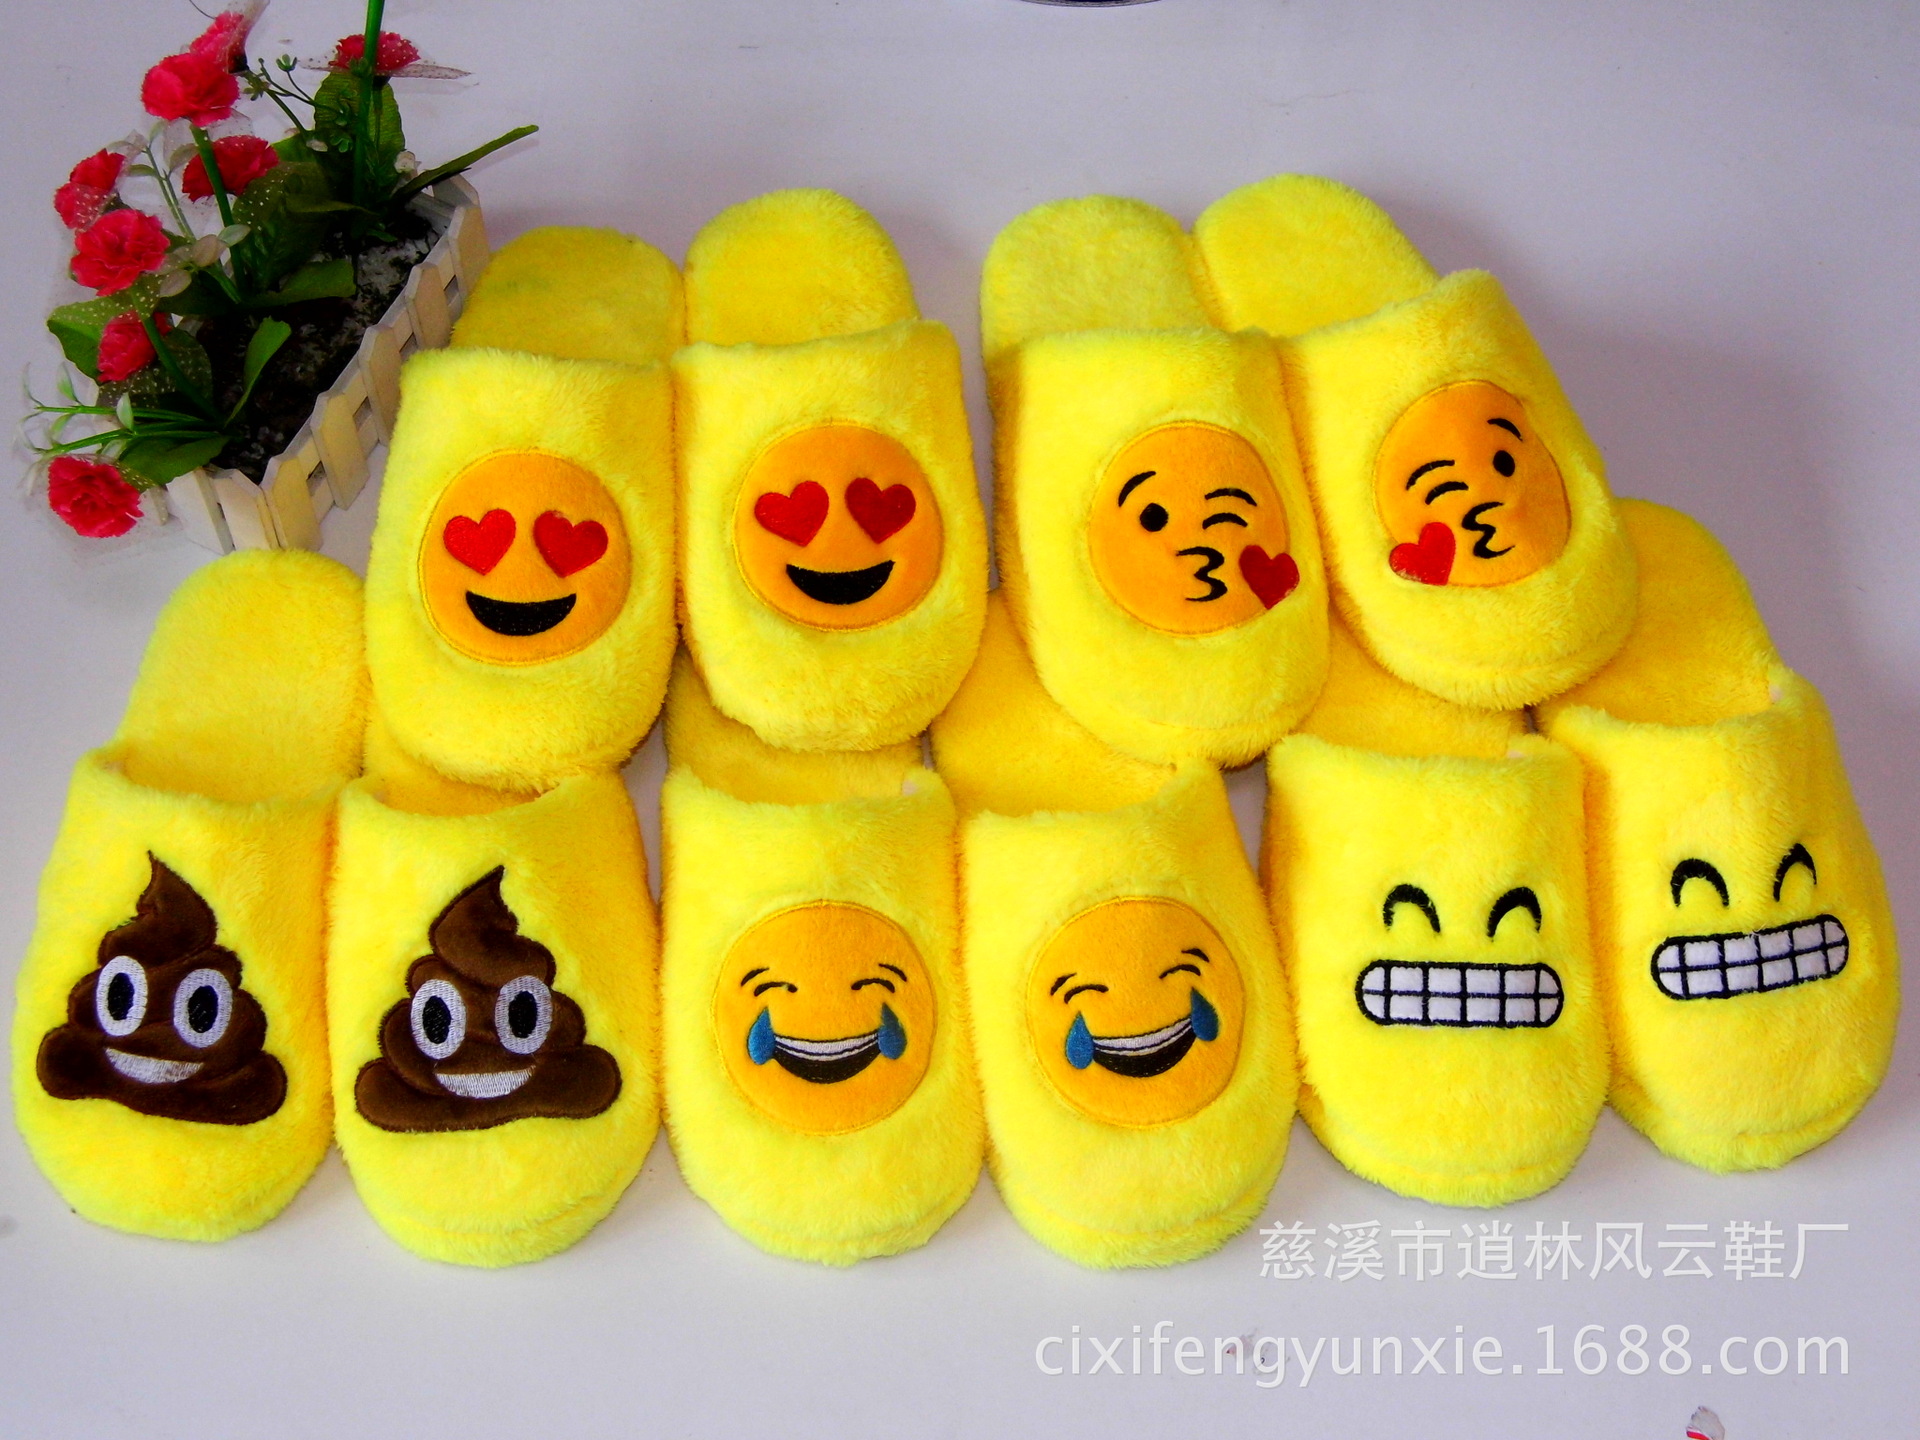 emojiQQ emoji spring cotton slippers hom...